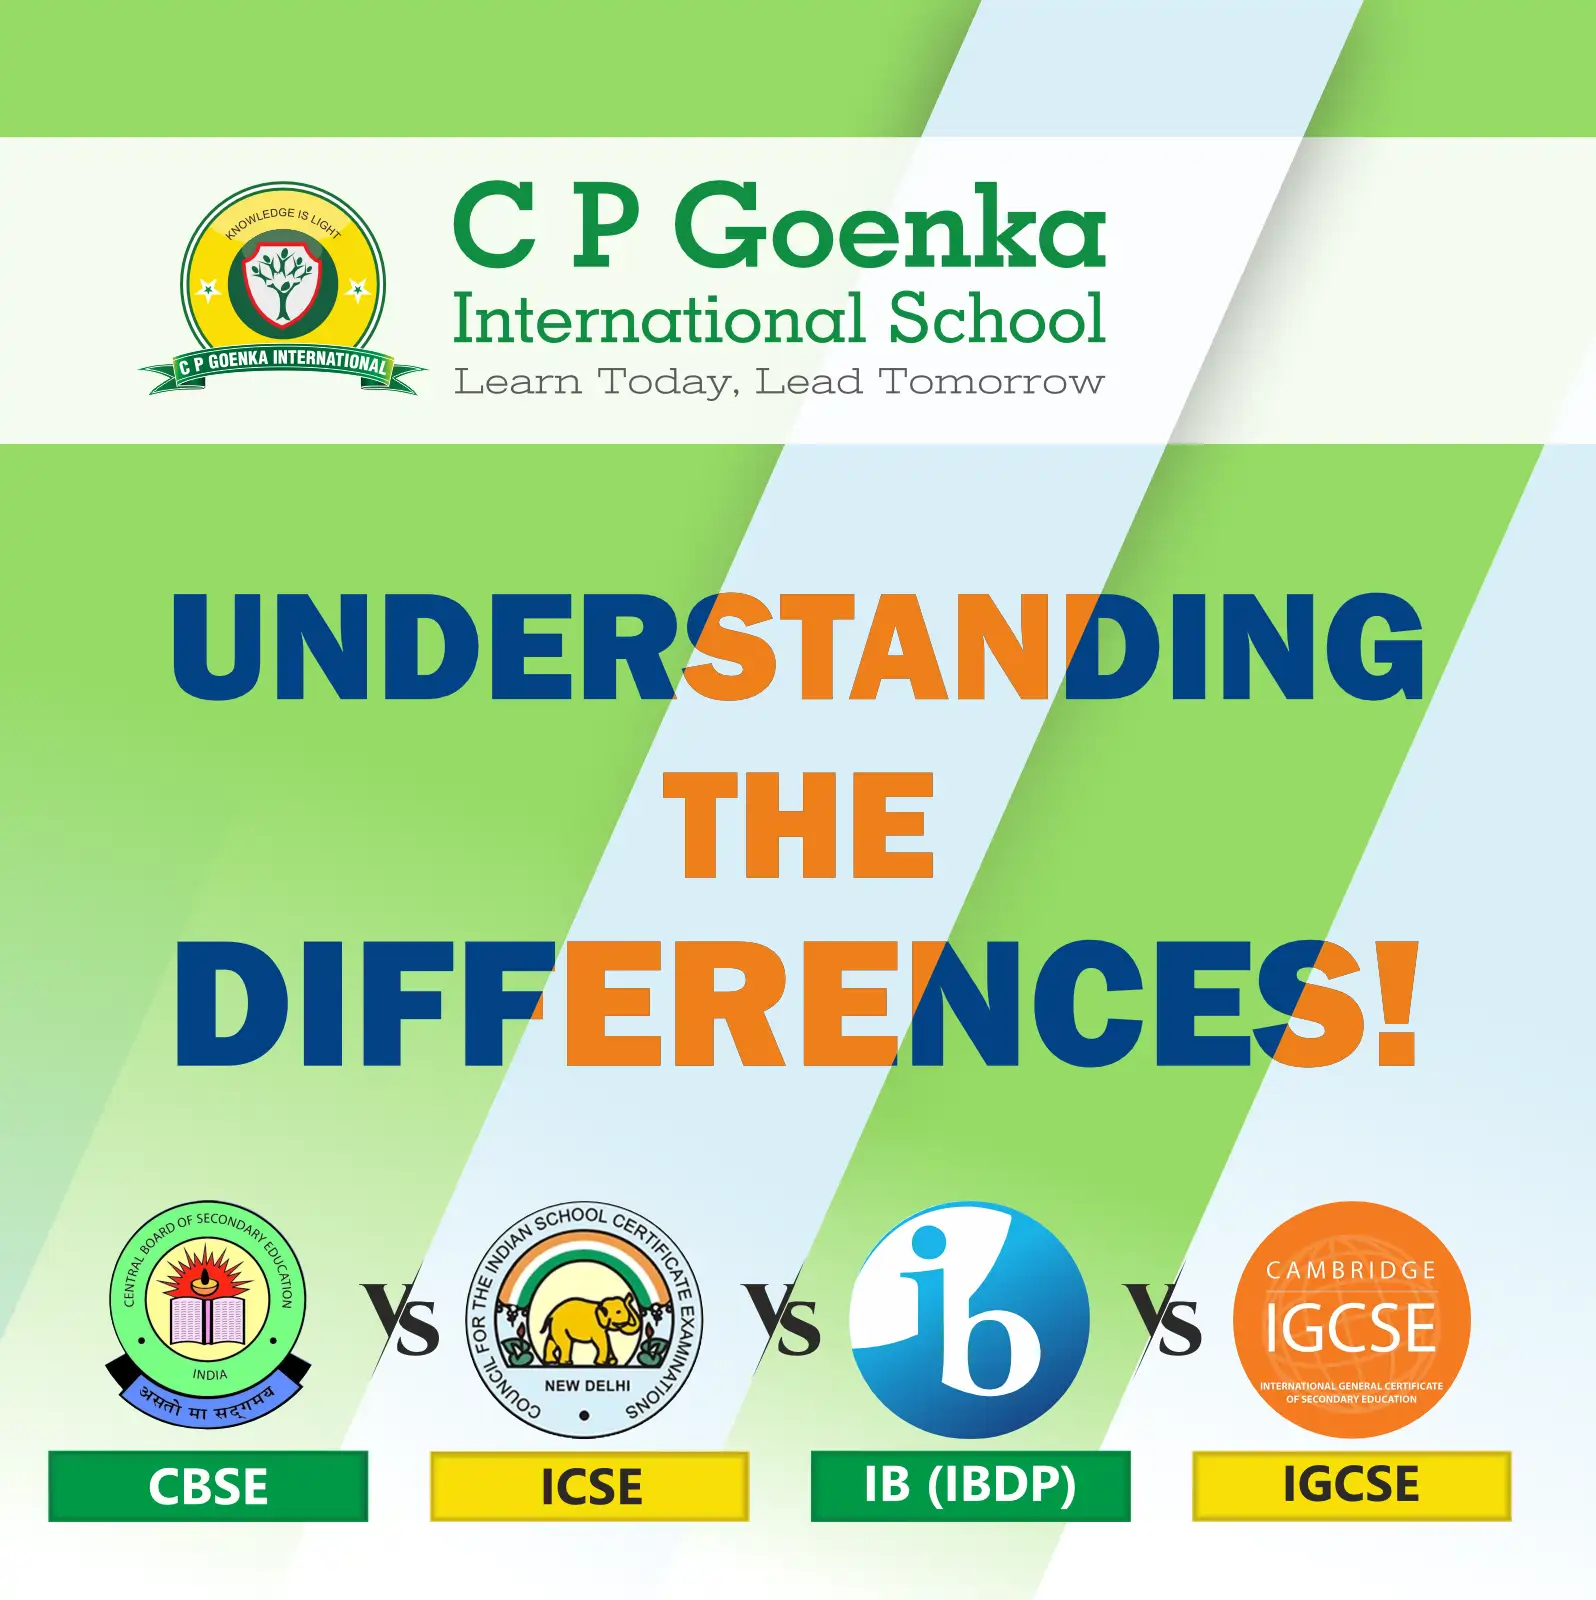 CBSE vs ICSE vs IB vs IGCSE